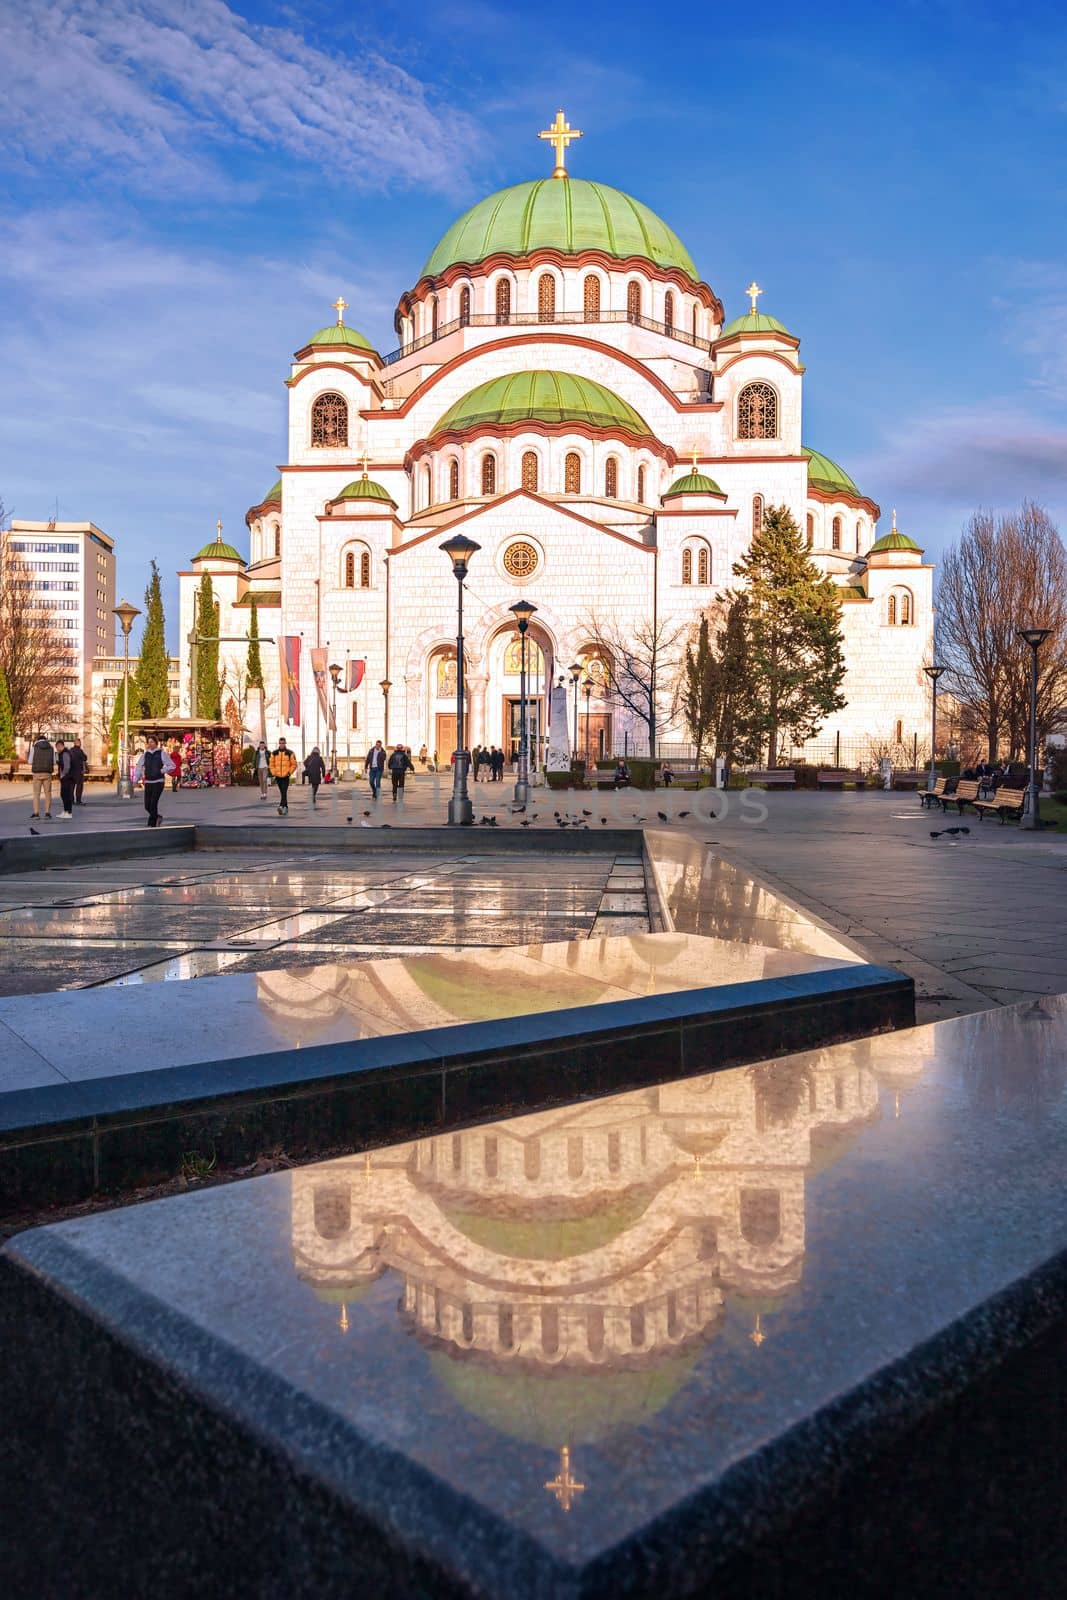 Church of Saint Sava - Serbian Orthodox church located on the Vracar plateau in Belgrade, Serbia by zhu_zhu